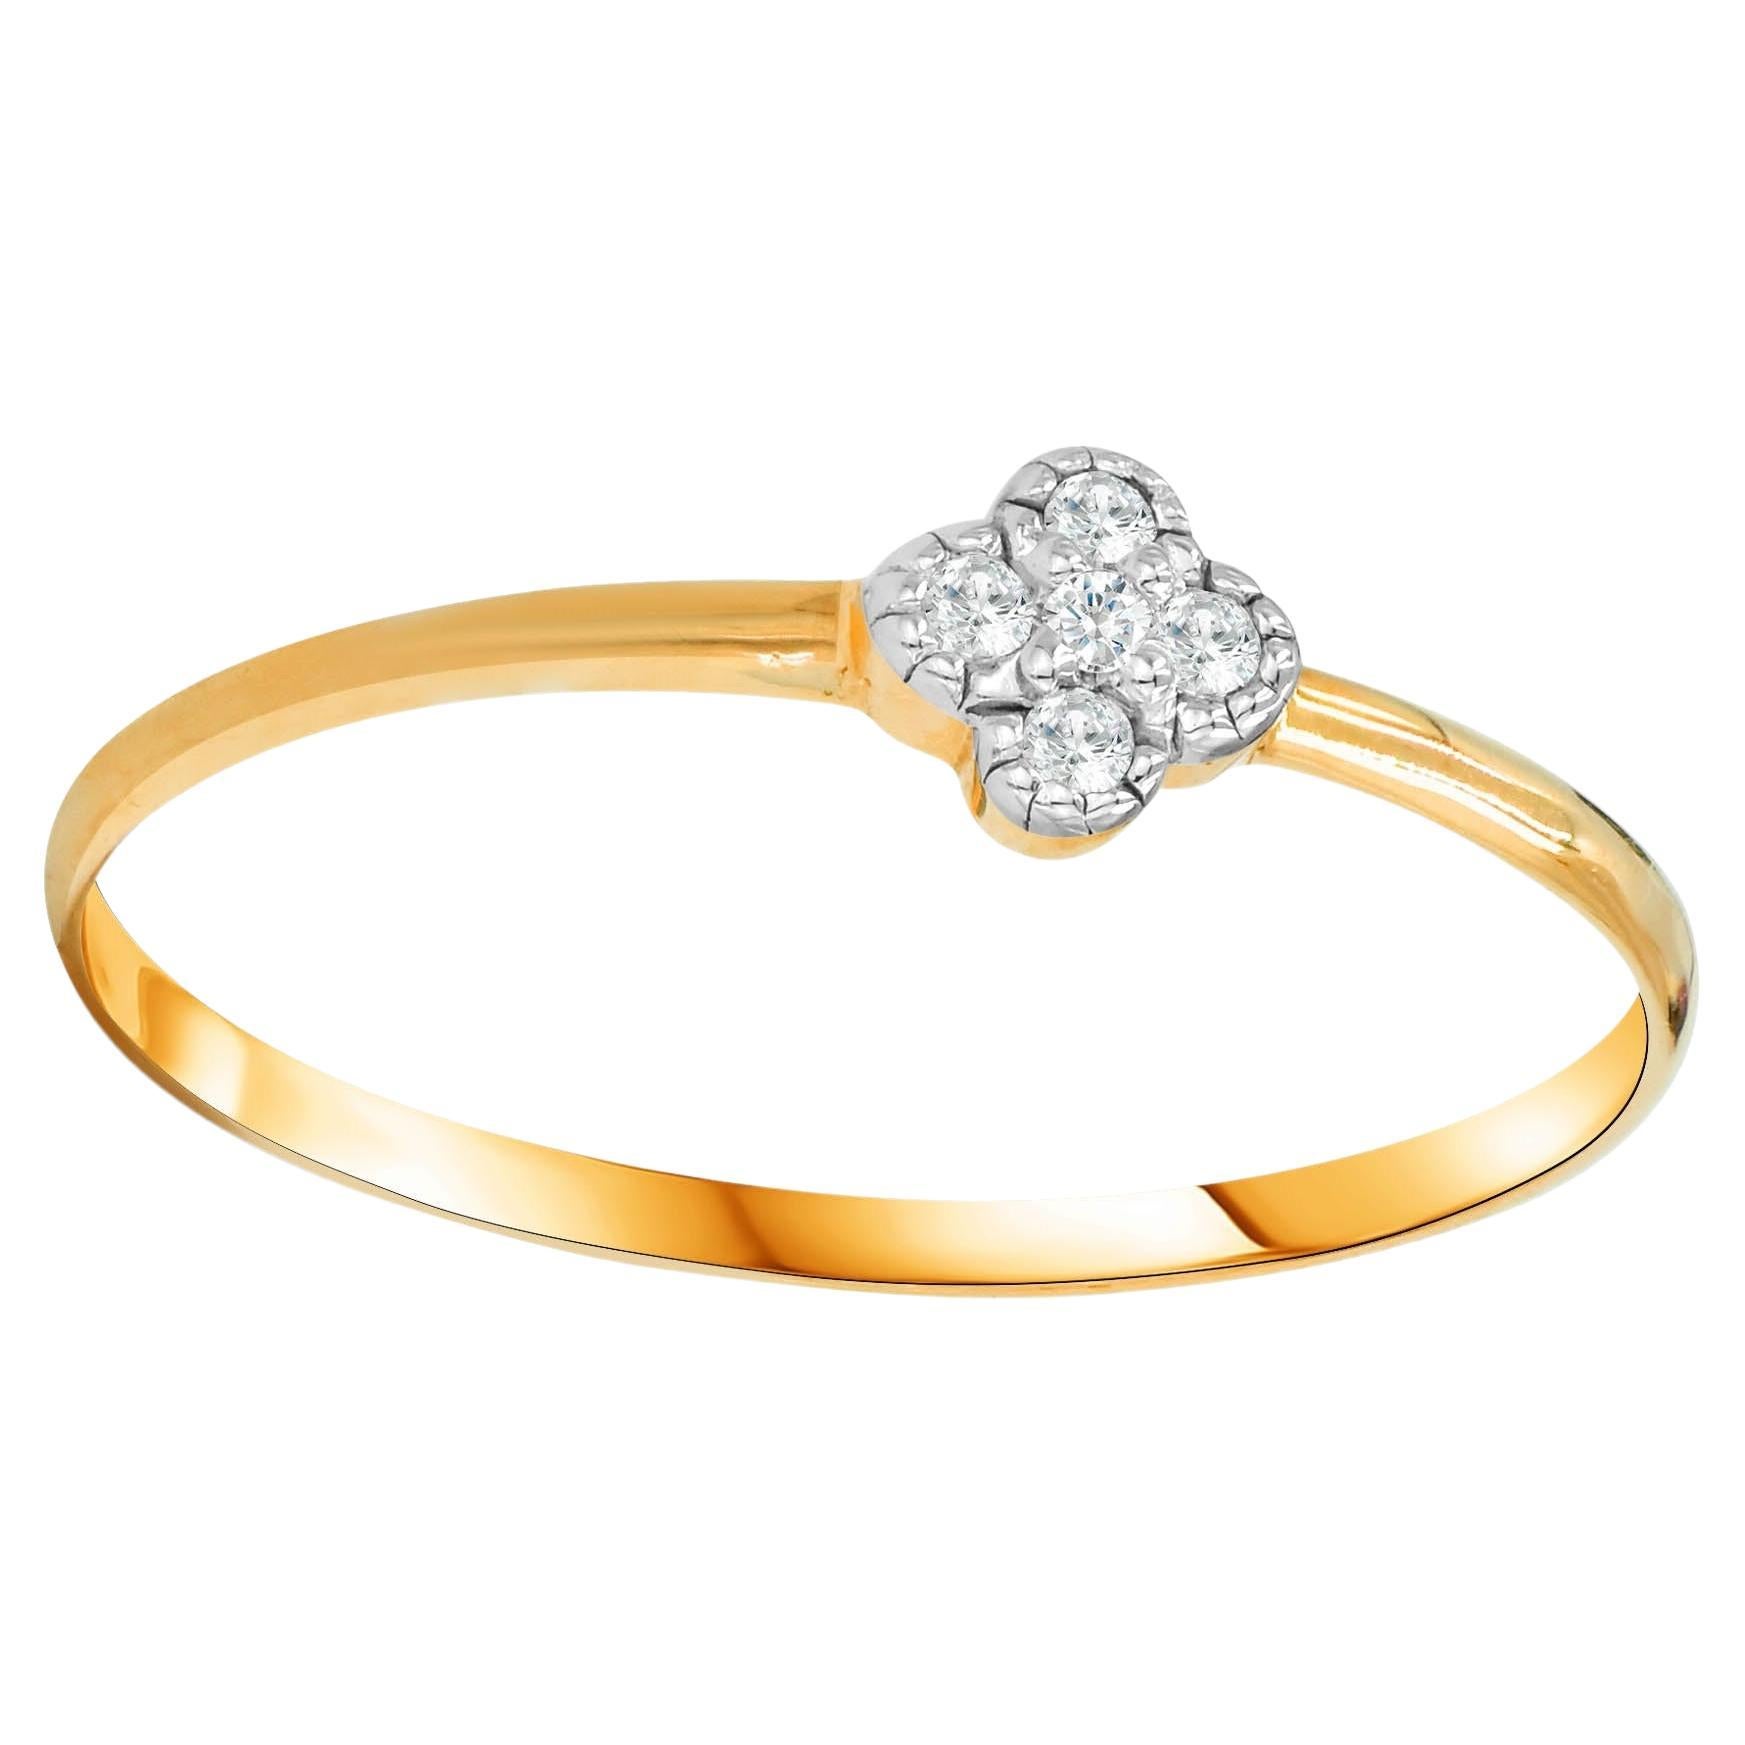 Buy 18Kt Minimalist Diamond Ring 148MA161 Online from Vaibhav Jewellers